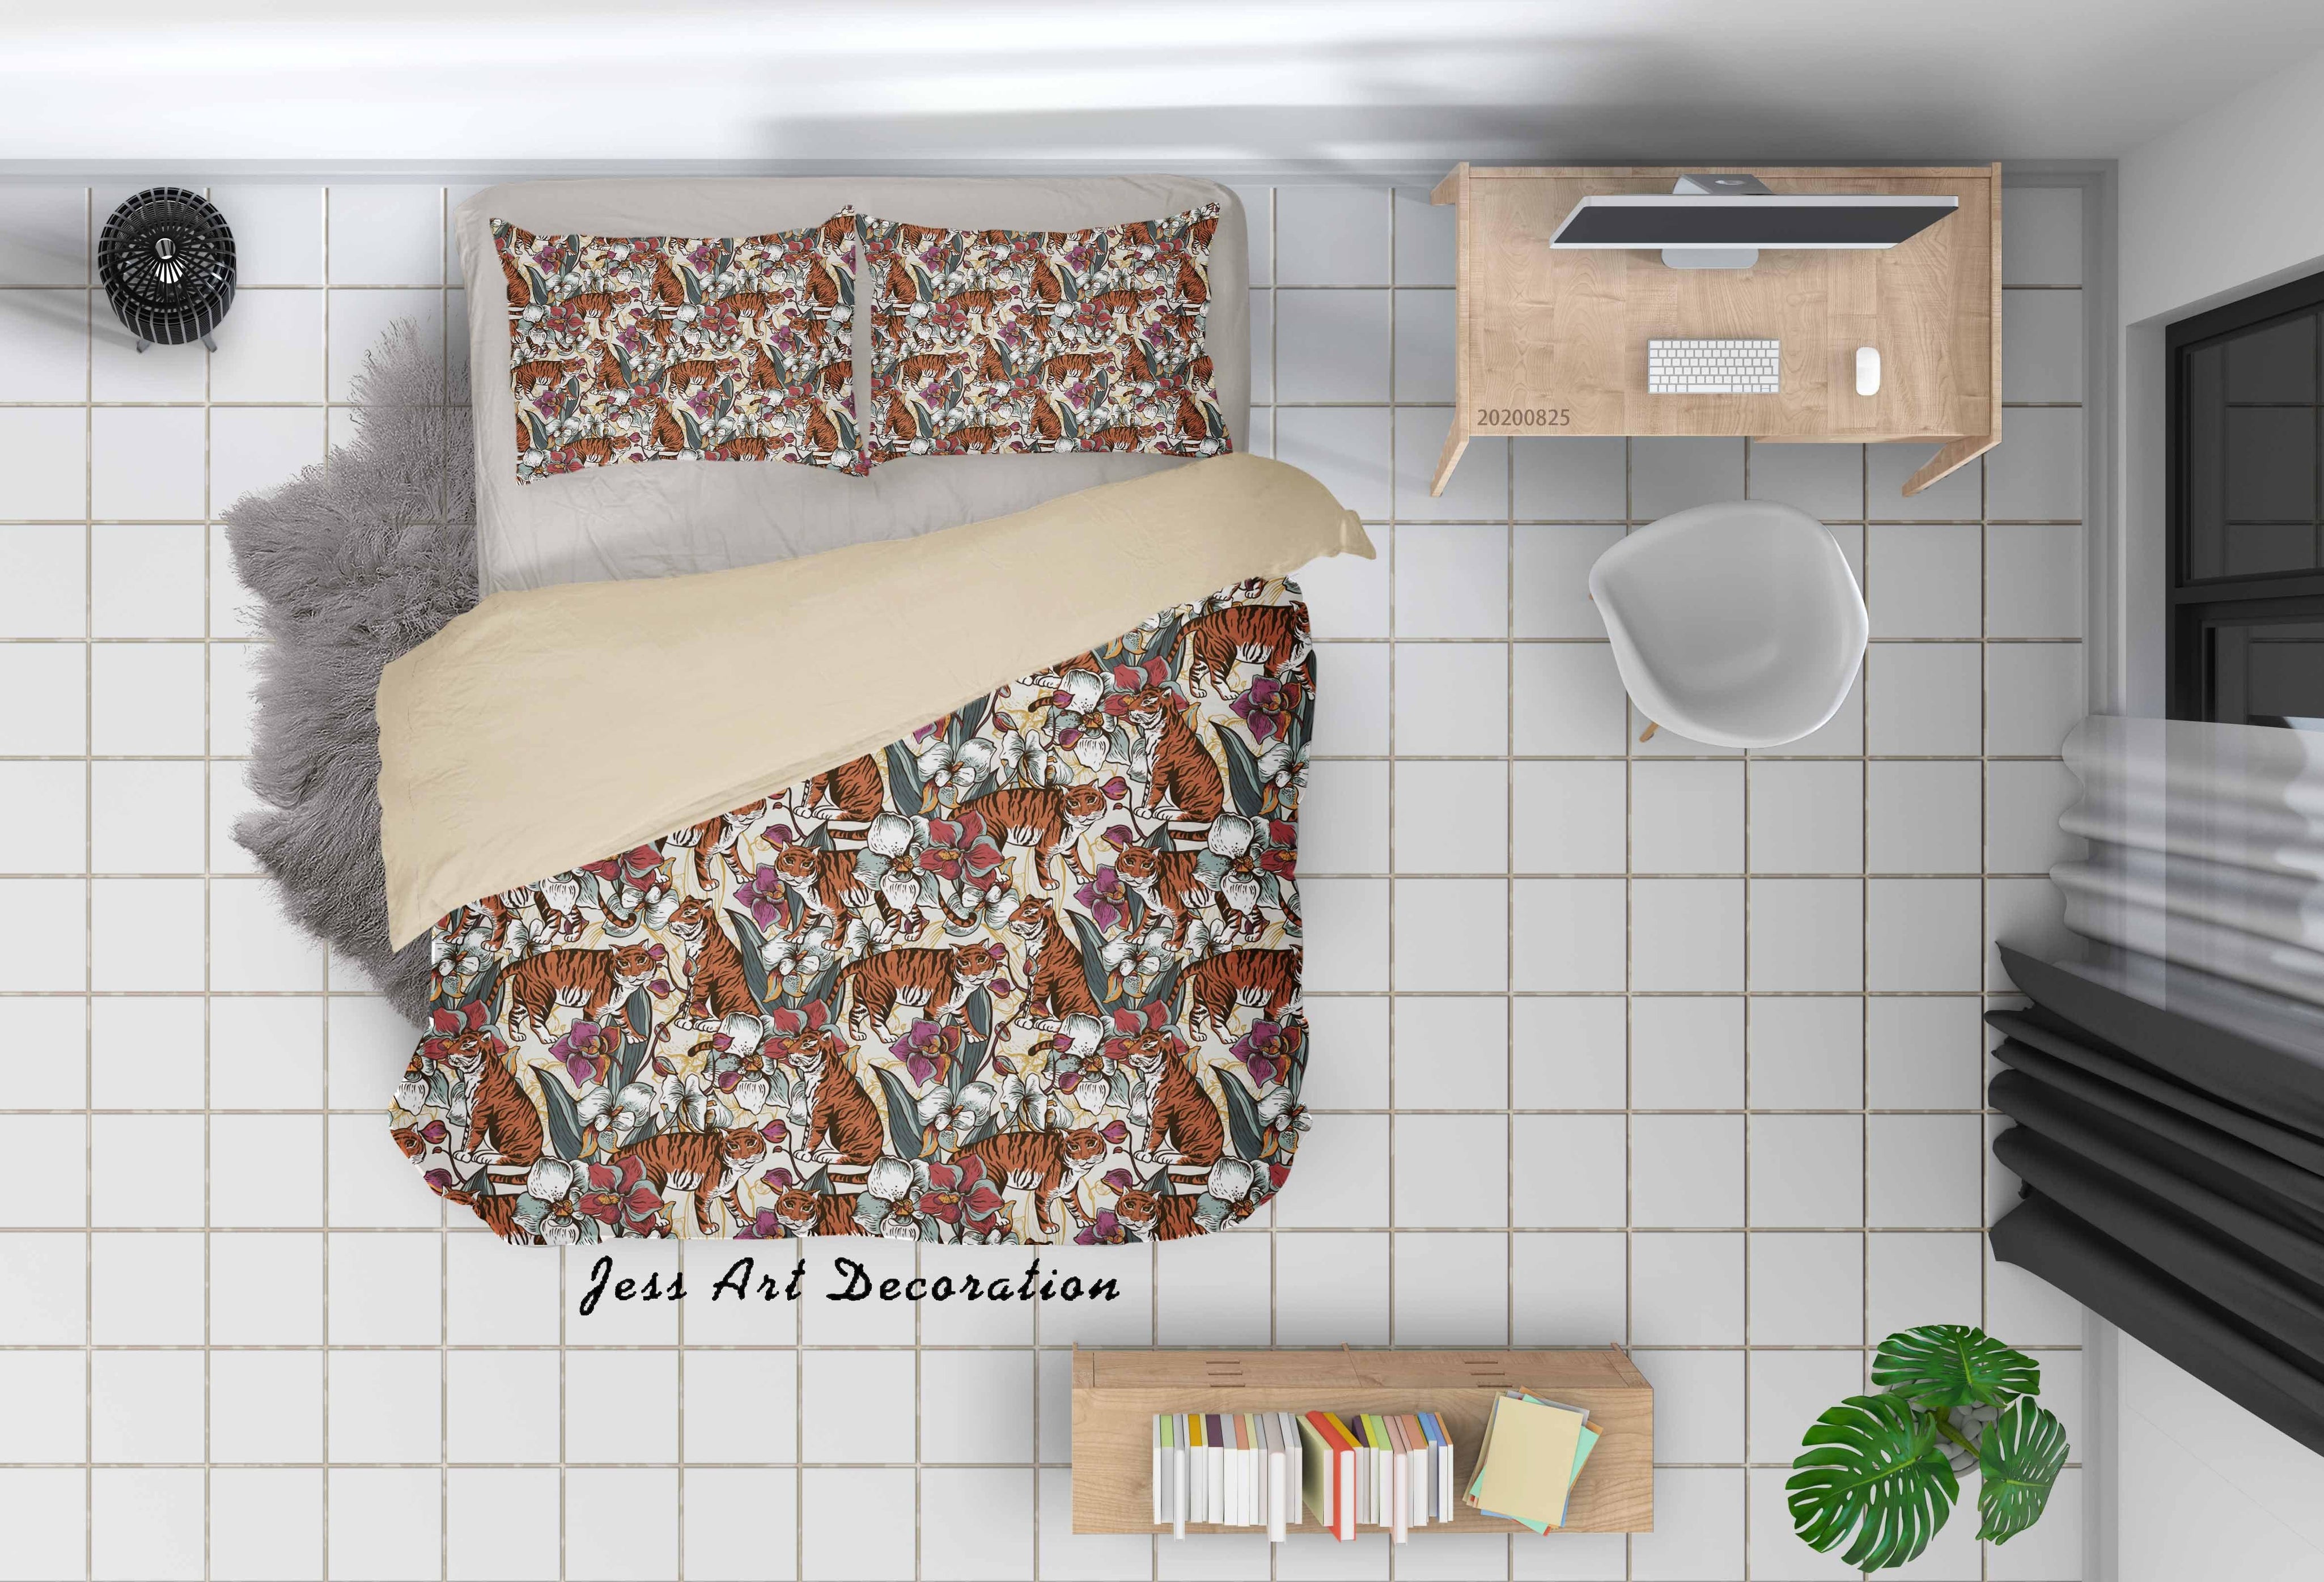 3D Abstract Cartoon Tiger Pattern Quilt Cover Set Bedding Set Duvet Cover Pillowcases WJ 3351- Jess Art Decoration